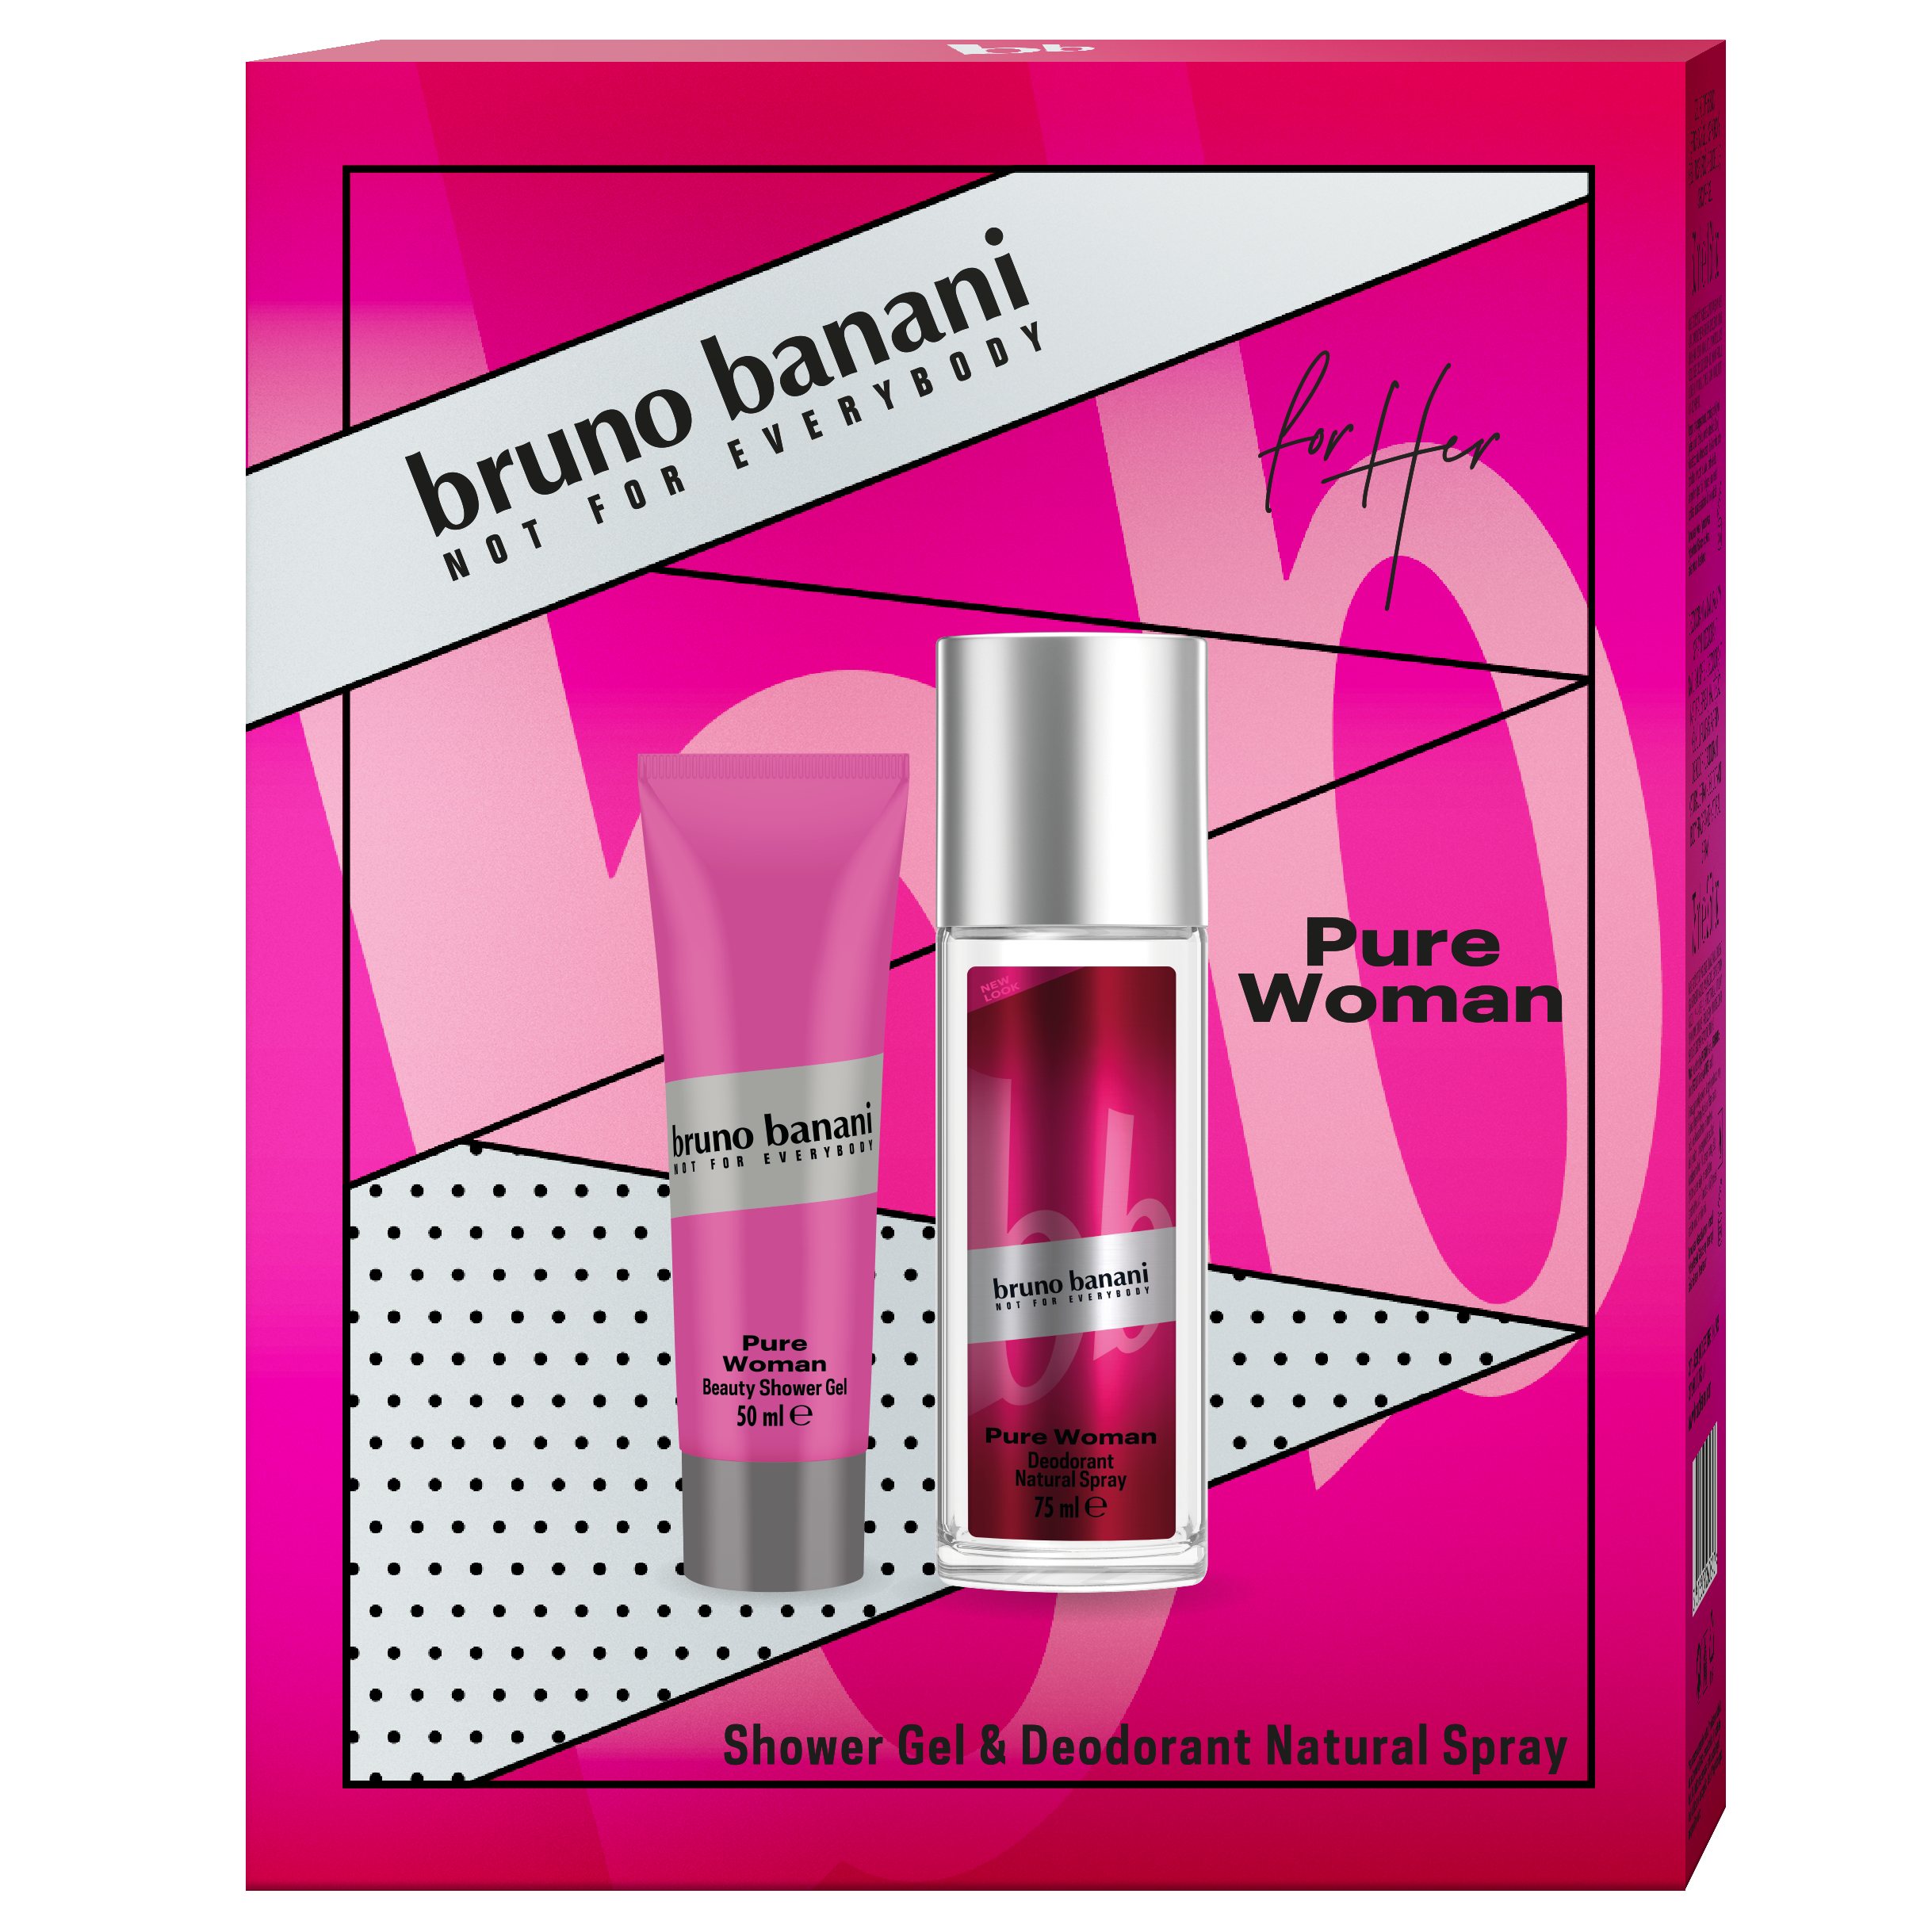 Banani natural 75 ml deodorant tusfürdő Woman Bruno spray Pure női 250 ml+